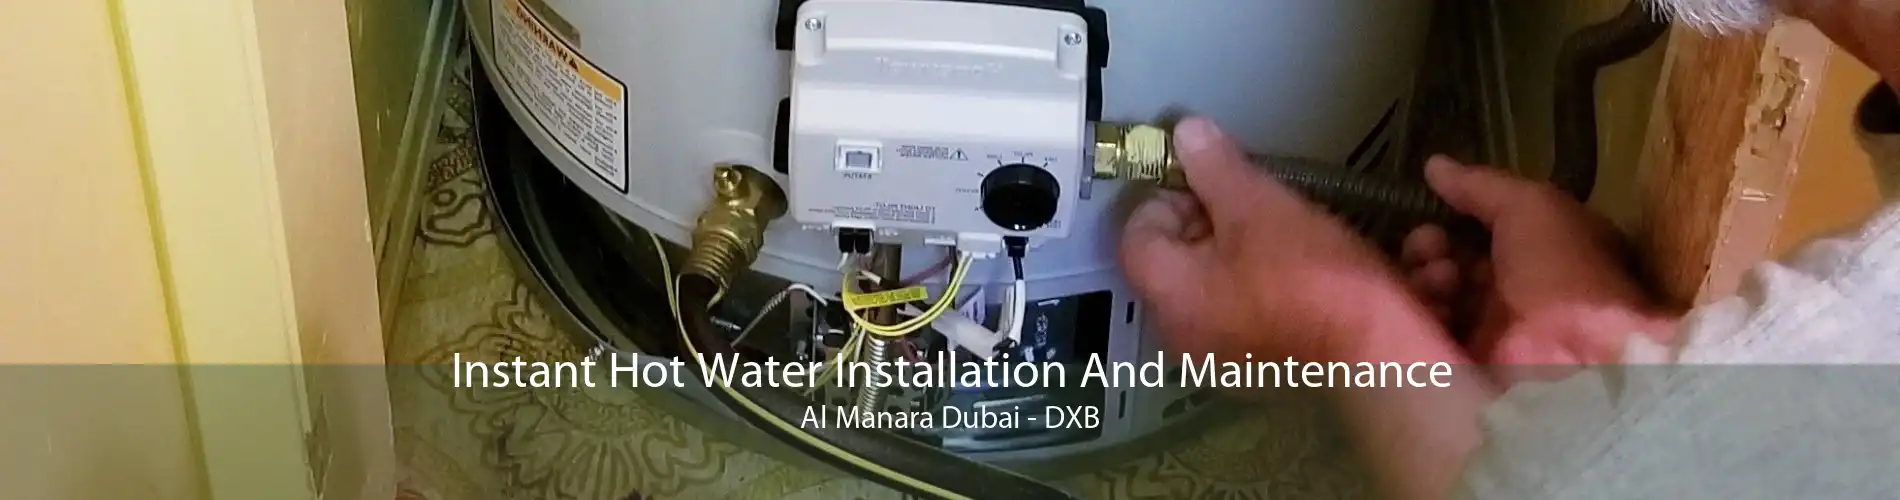 Instant Hot Water Installation And Maintenance Al Manara Dubai - DXB